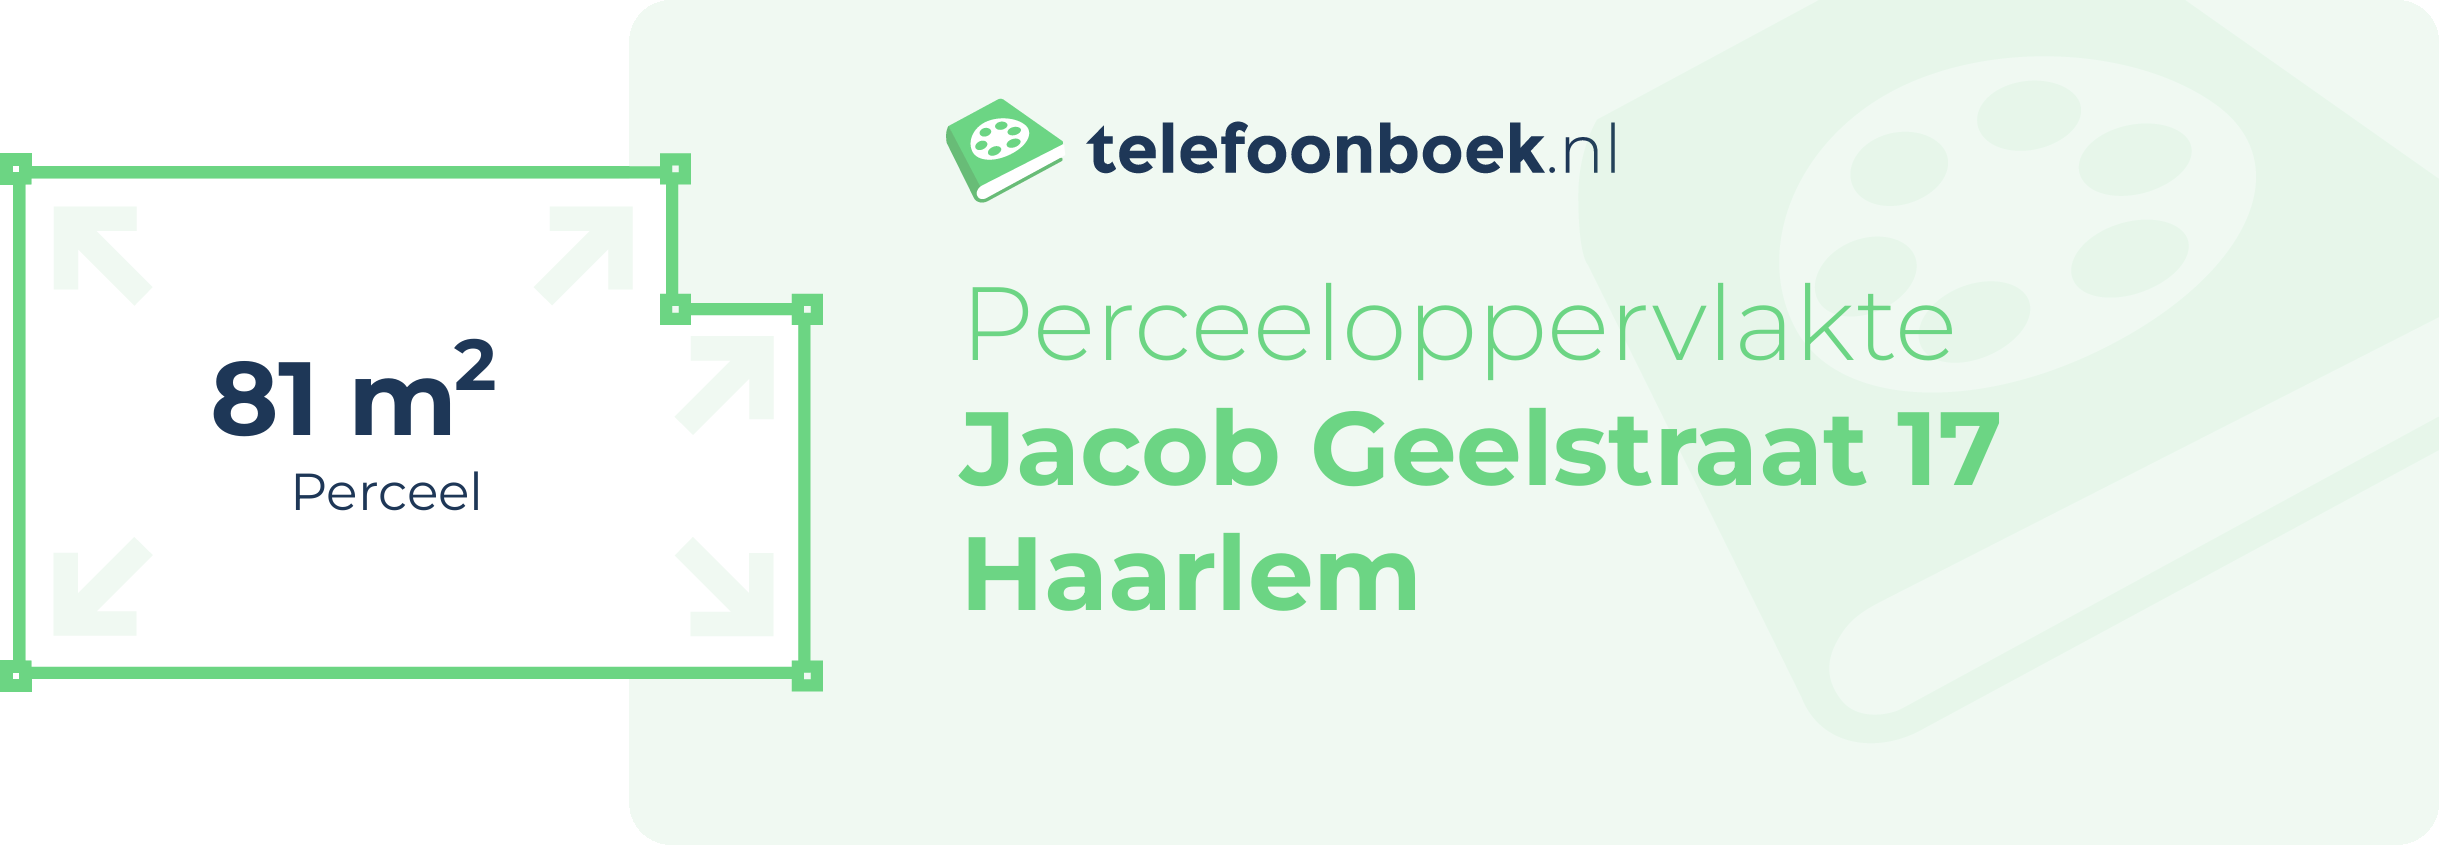 Perceeloppervlakte Jacob Geelstraat 17 Haarlem